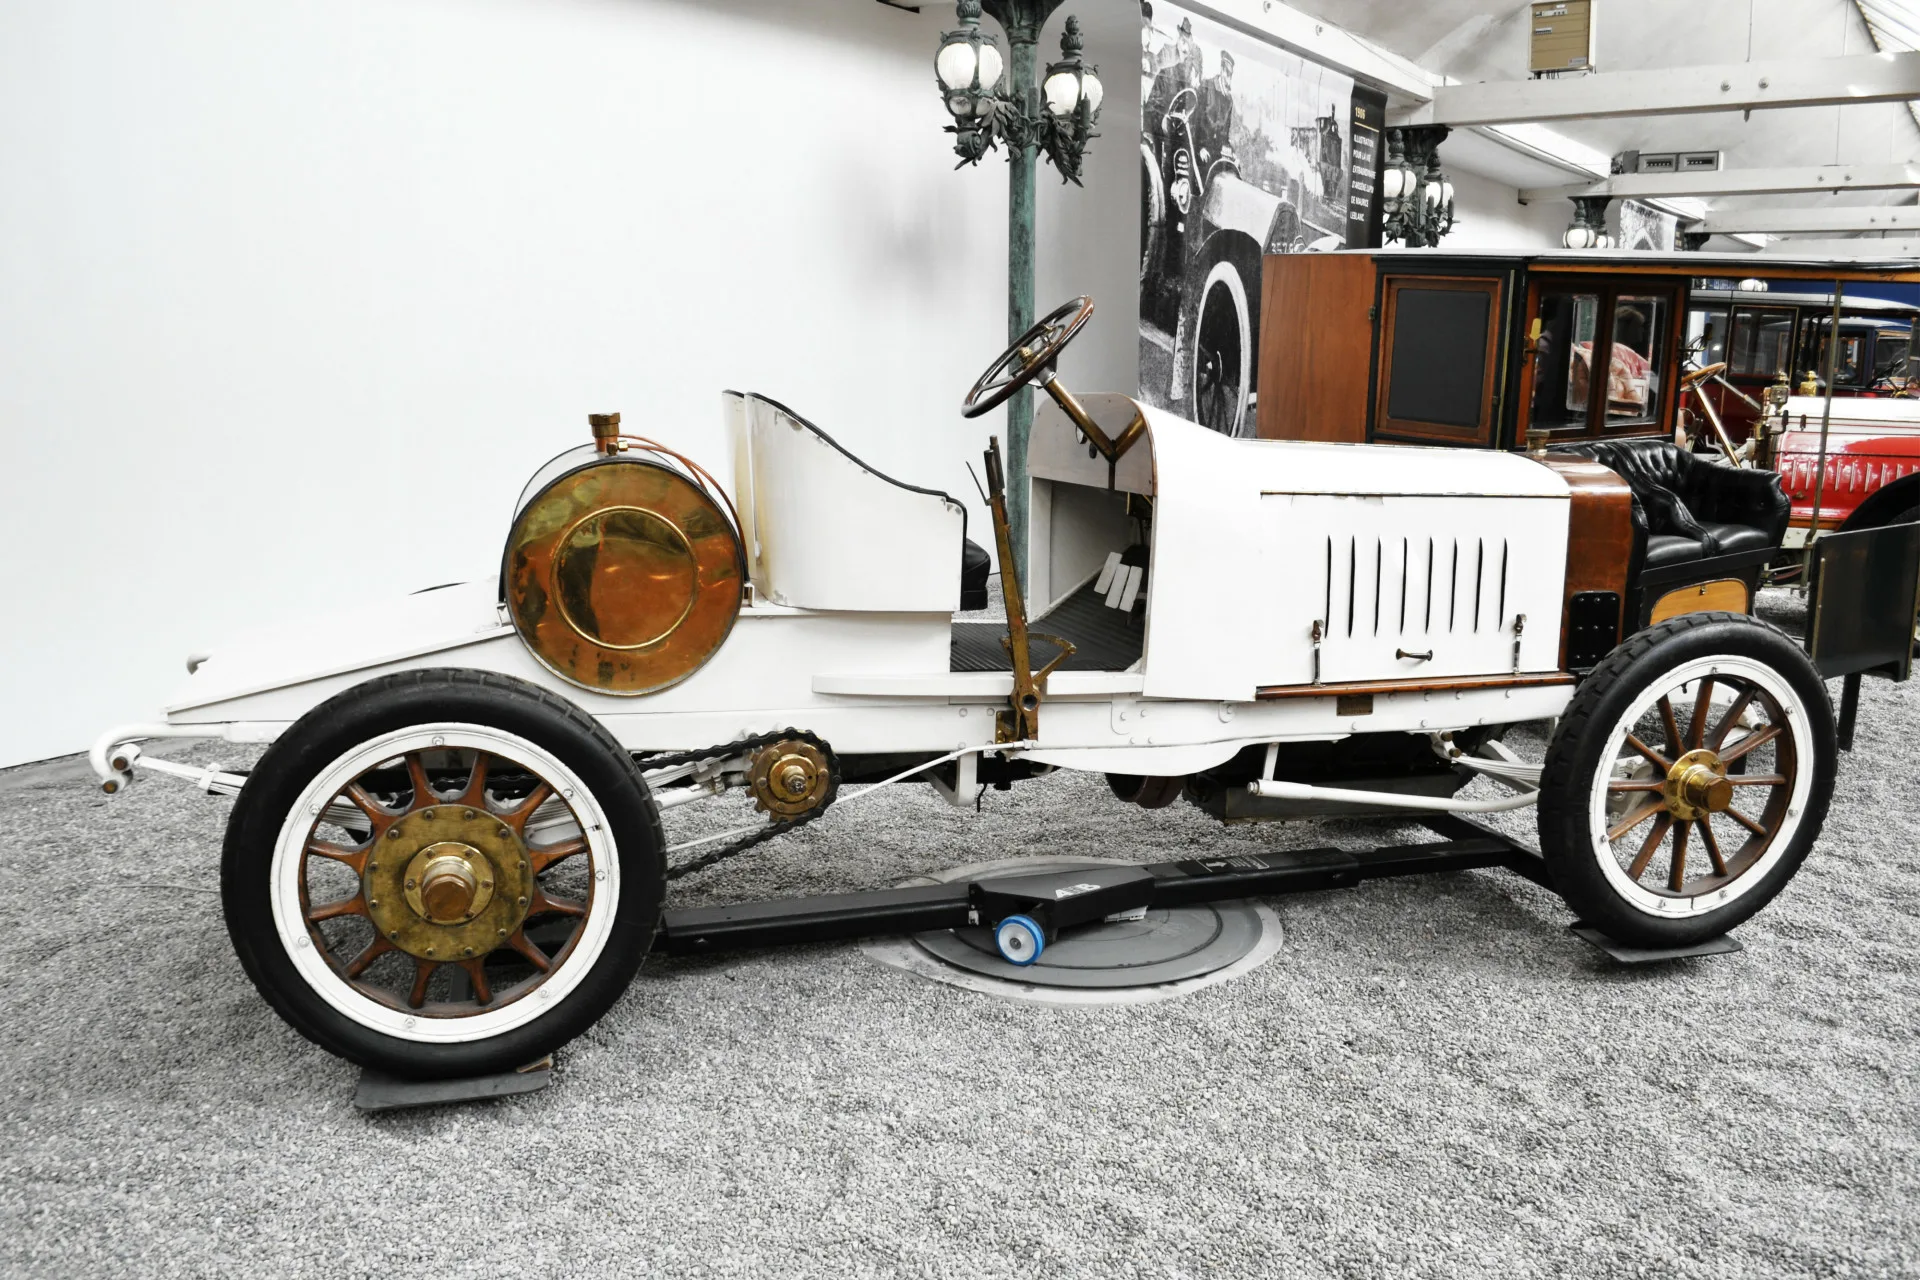 Cite de l’ Automobile, Μουσείο αυτοκινήτου στην Αλσατία 33